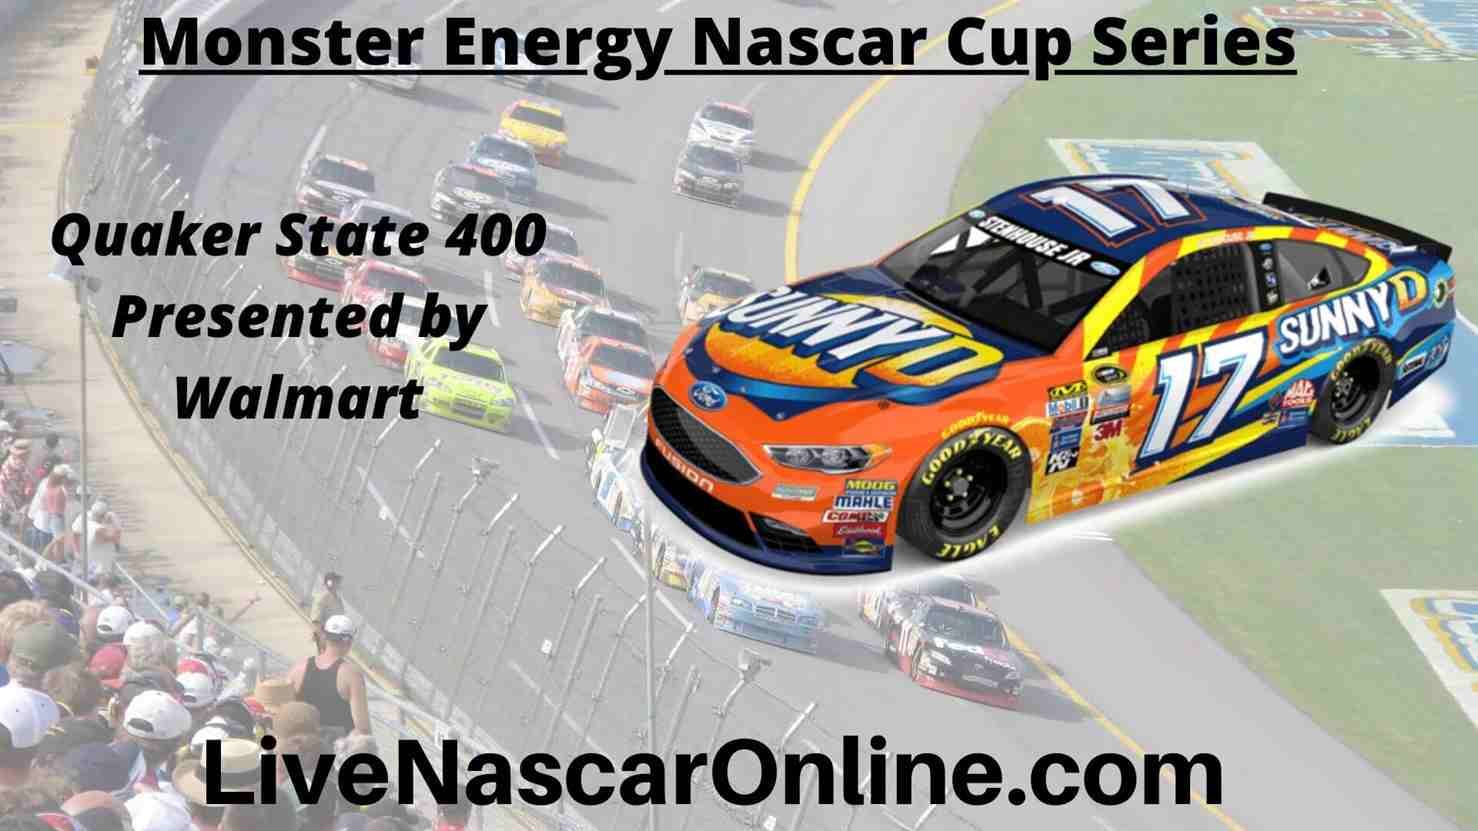 Live NASCAR Quaker State 400 Online